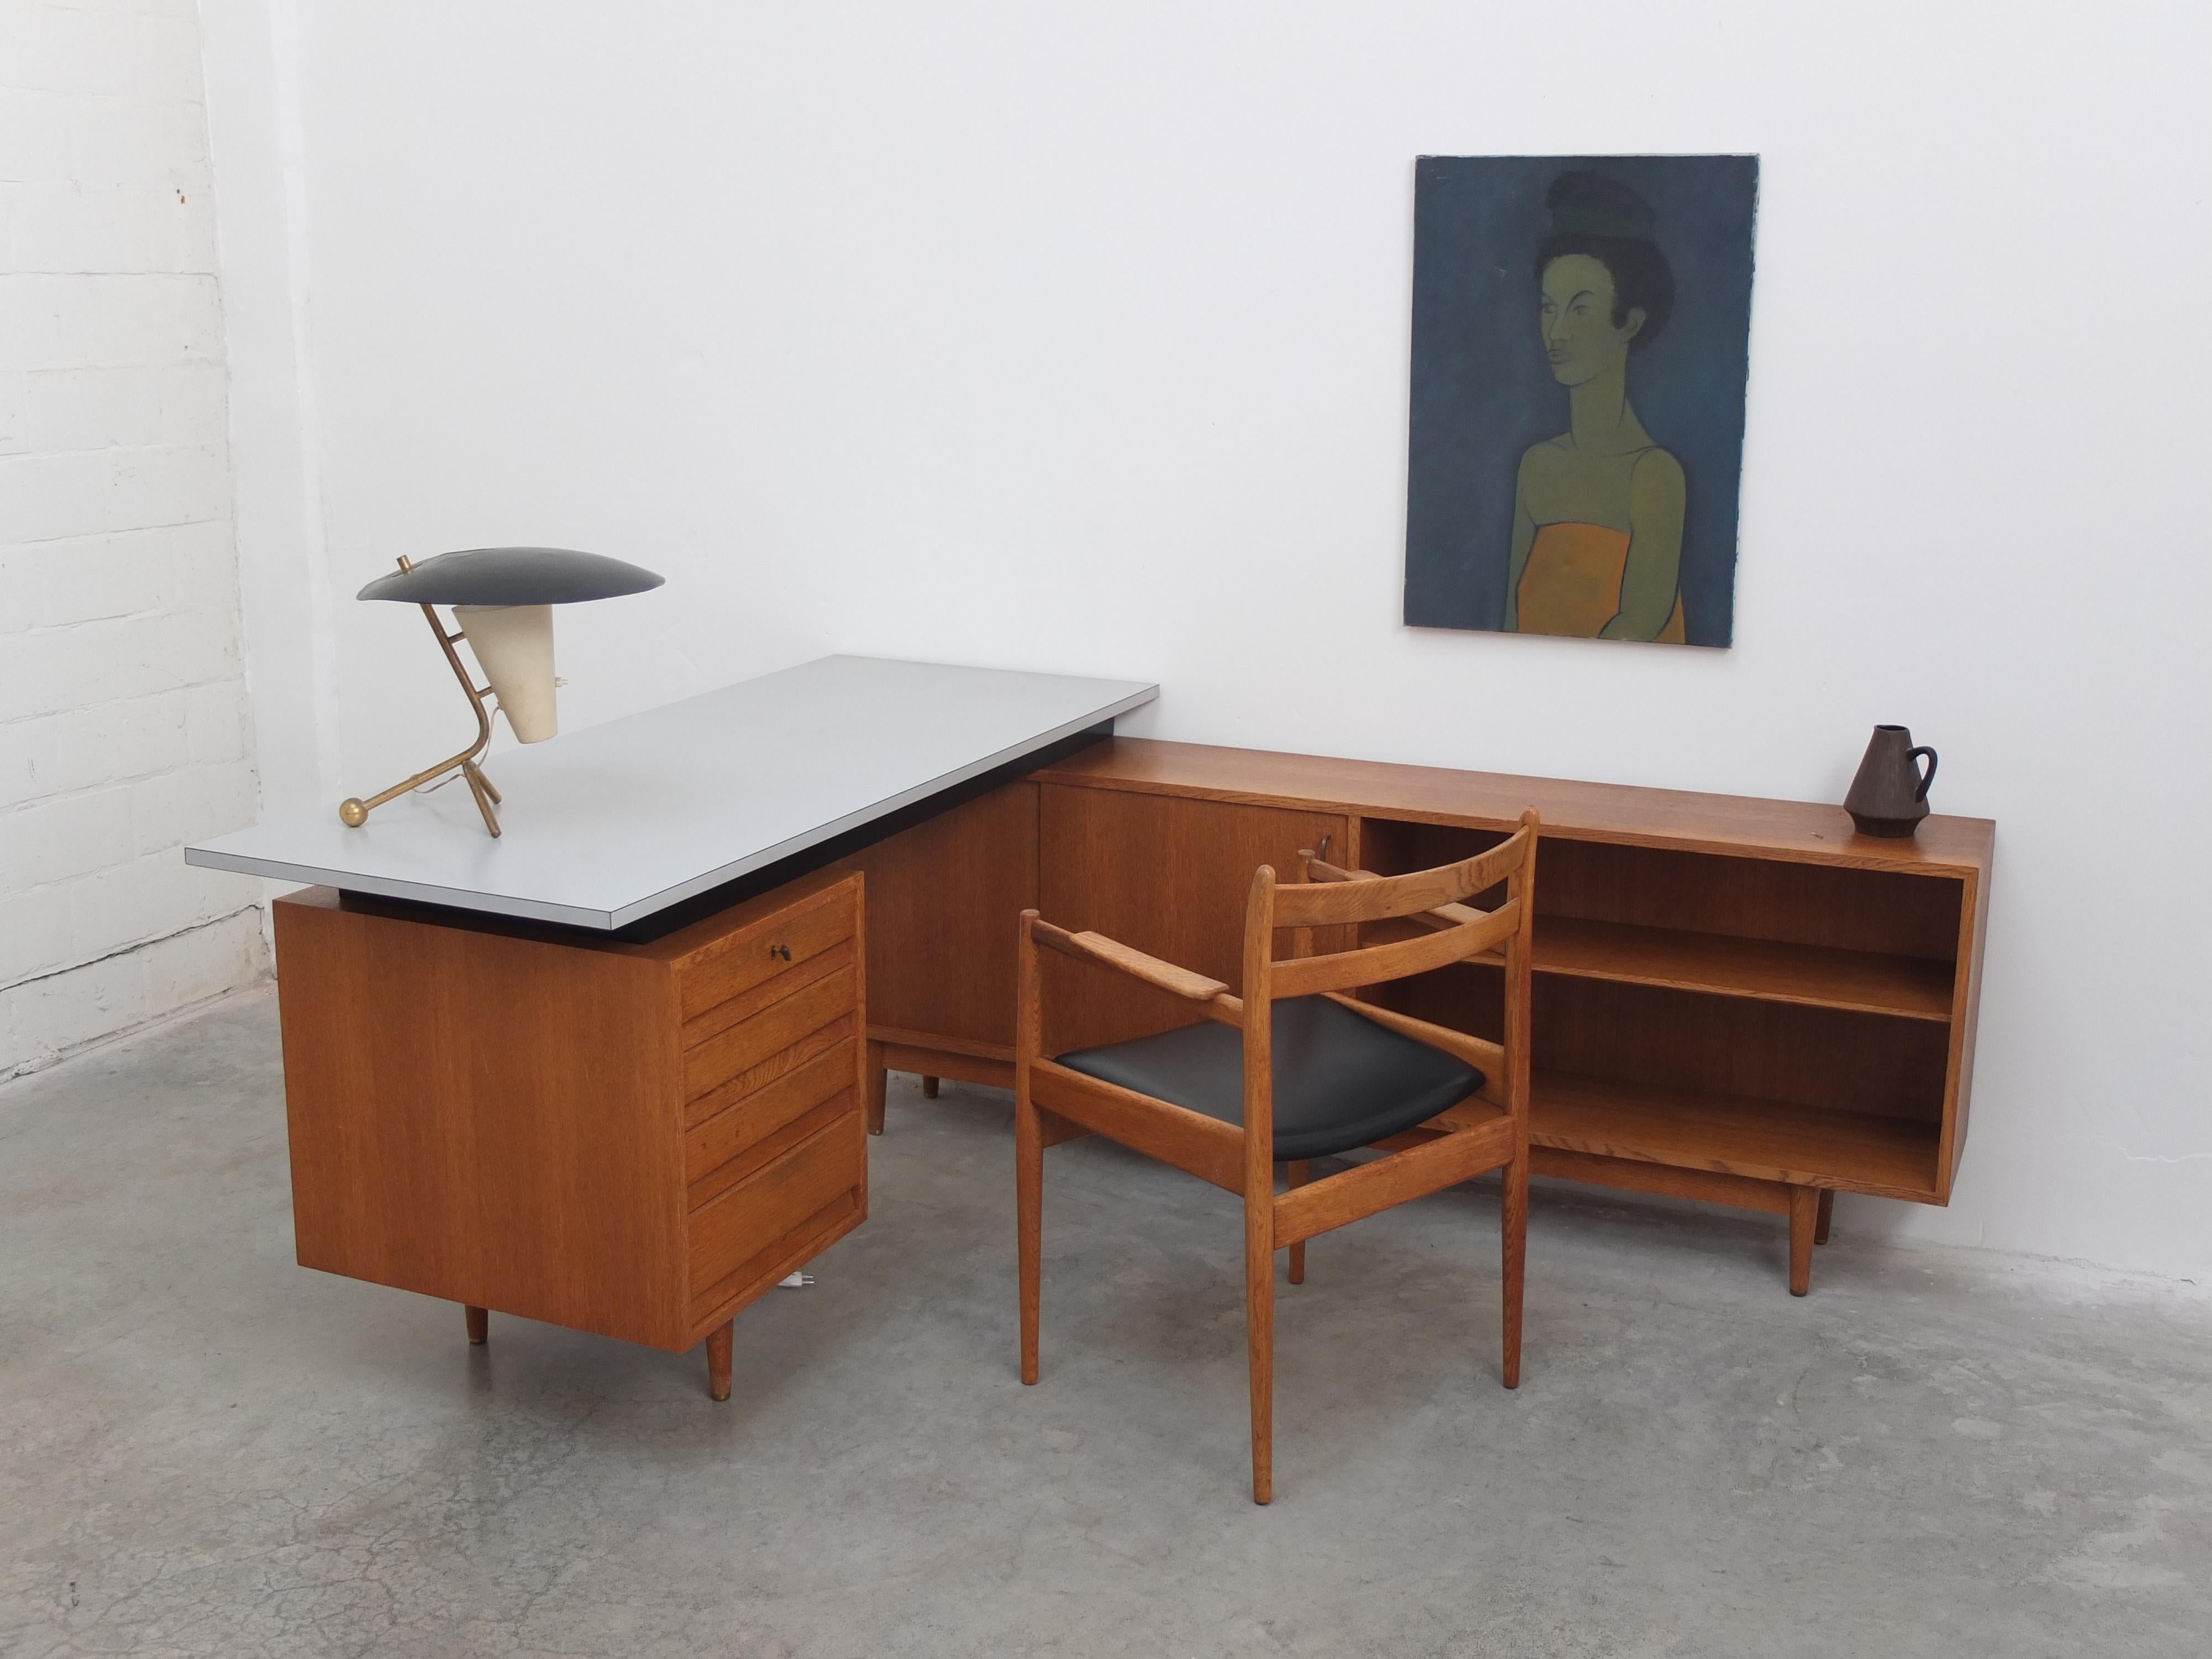 Belgian Rare Modernist Writing Desk by Jos De Mey for Van Den Berghe-Pauvers, 1960s For Sale